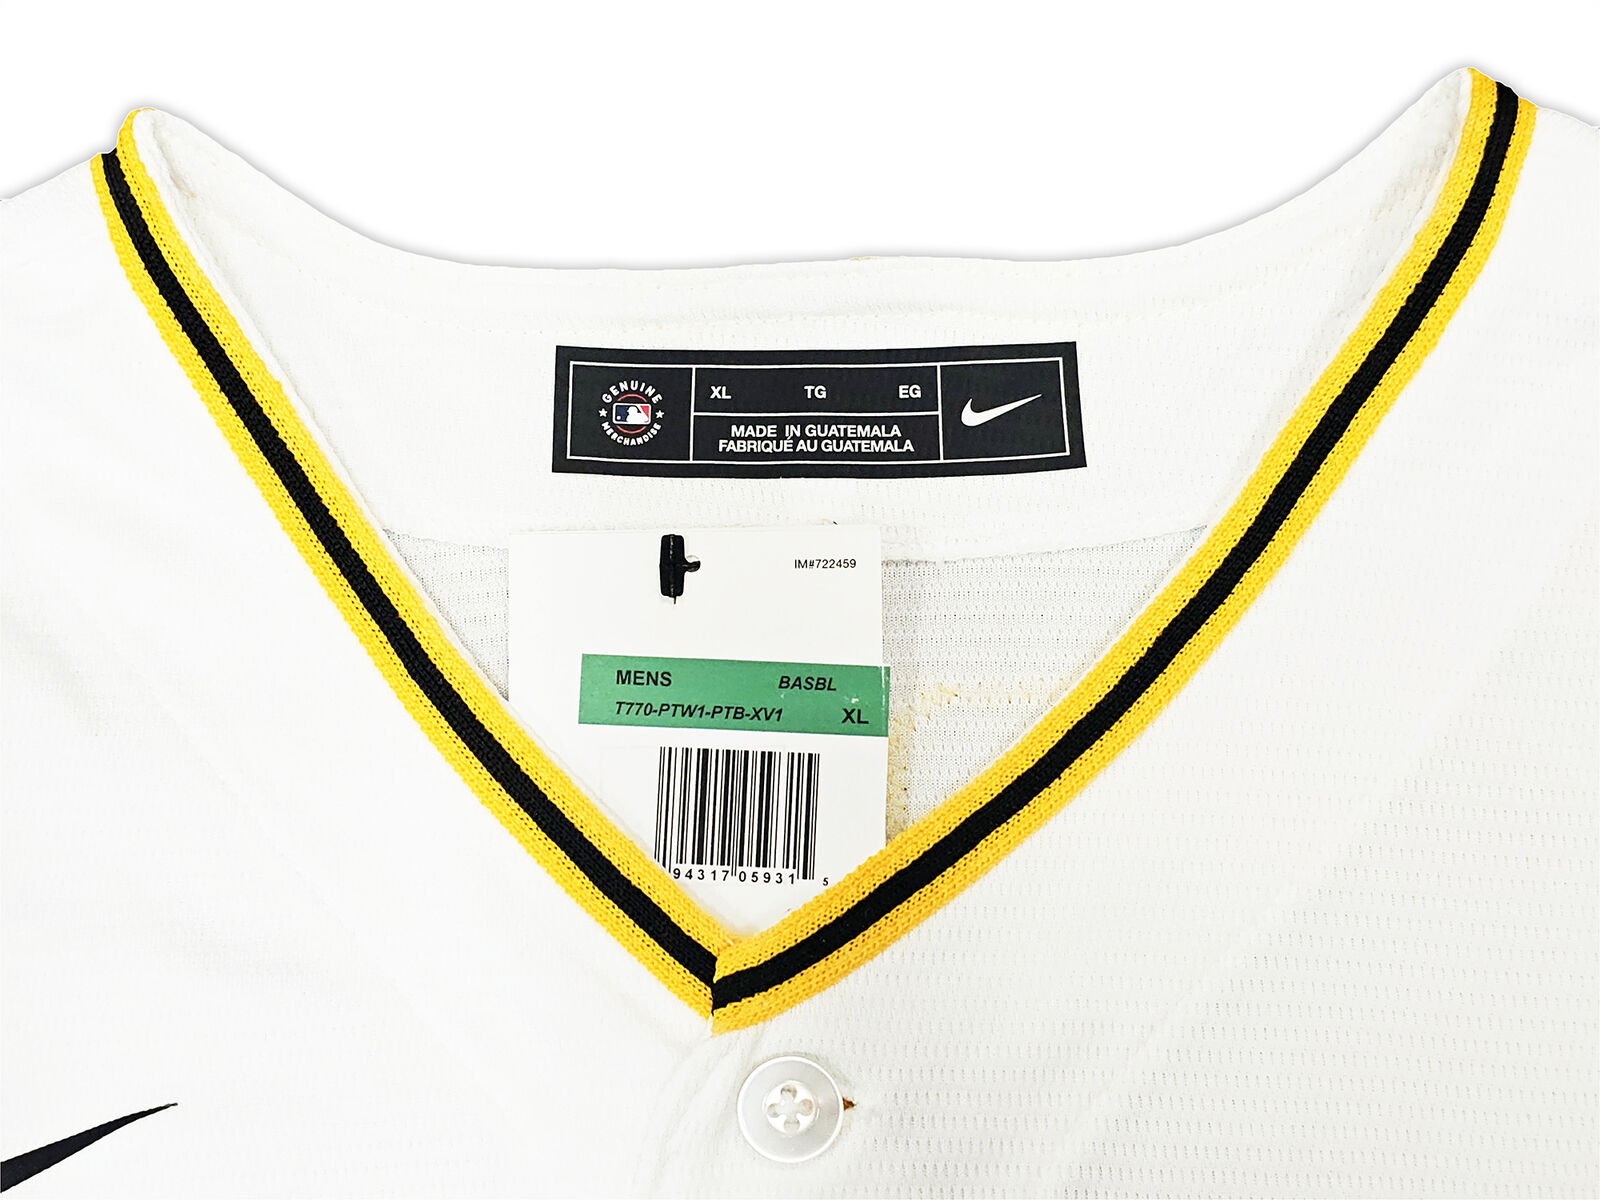 Pittsburgh Pirates Oneil Cruz Autographed White Nike Jersey Size L Beckett  BAS QR Stock #220604